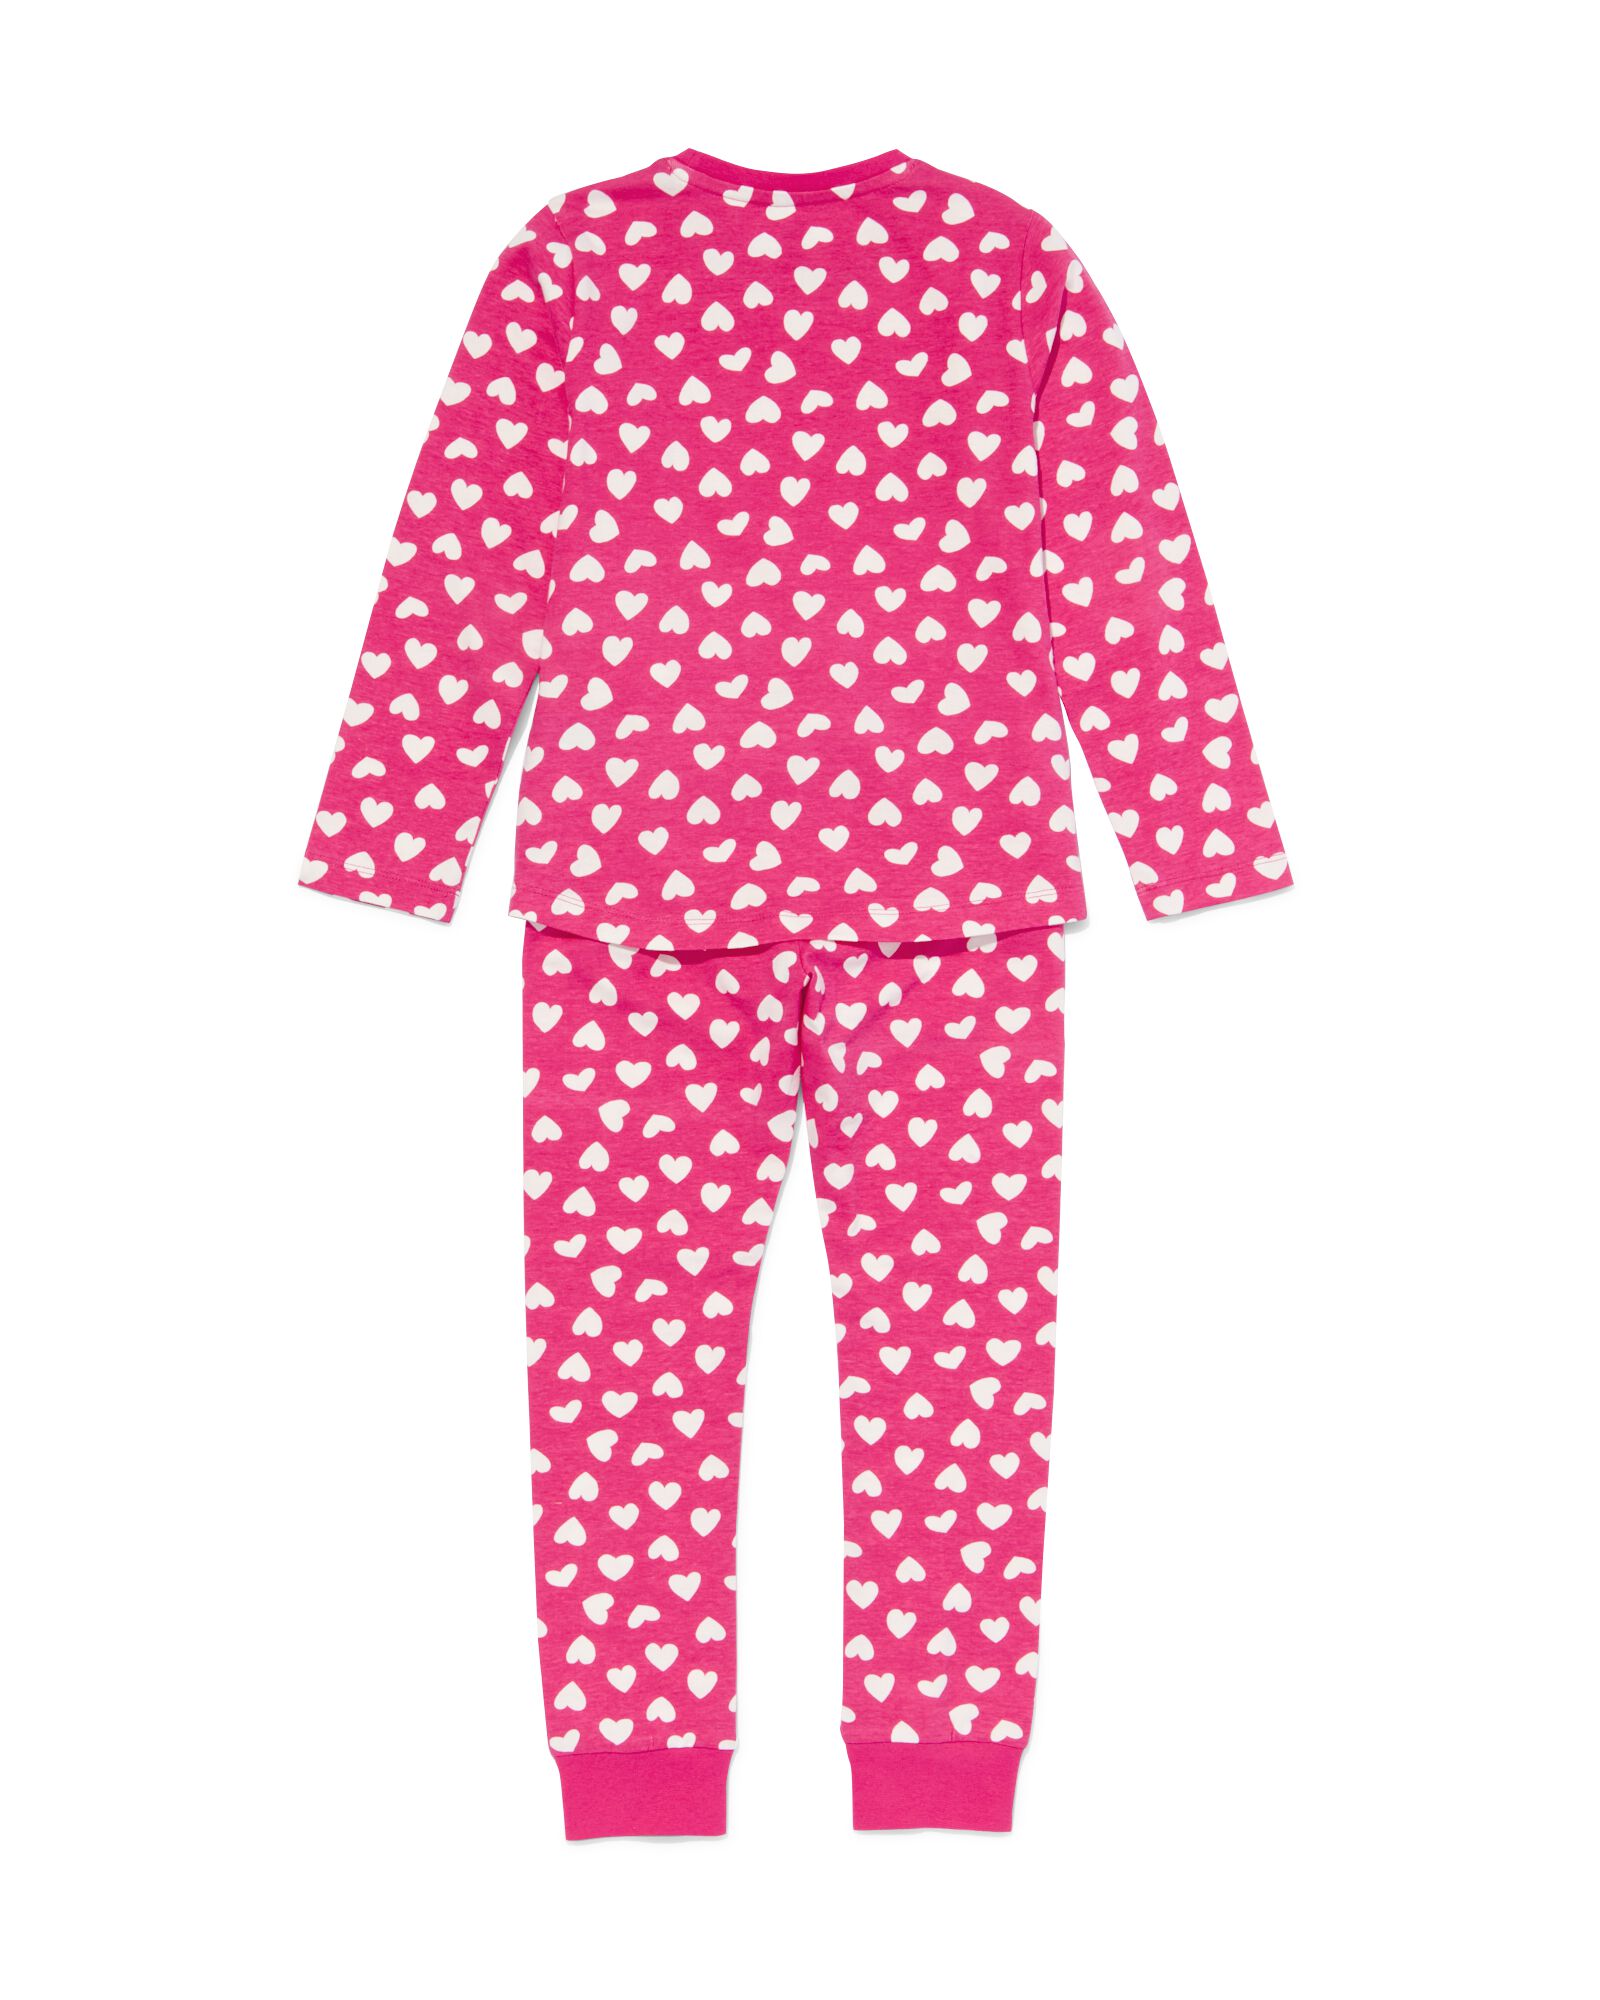 Kinder-Pyjama, Herzen knallrosa 146/152 - 23092787 - HEMA